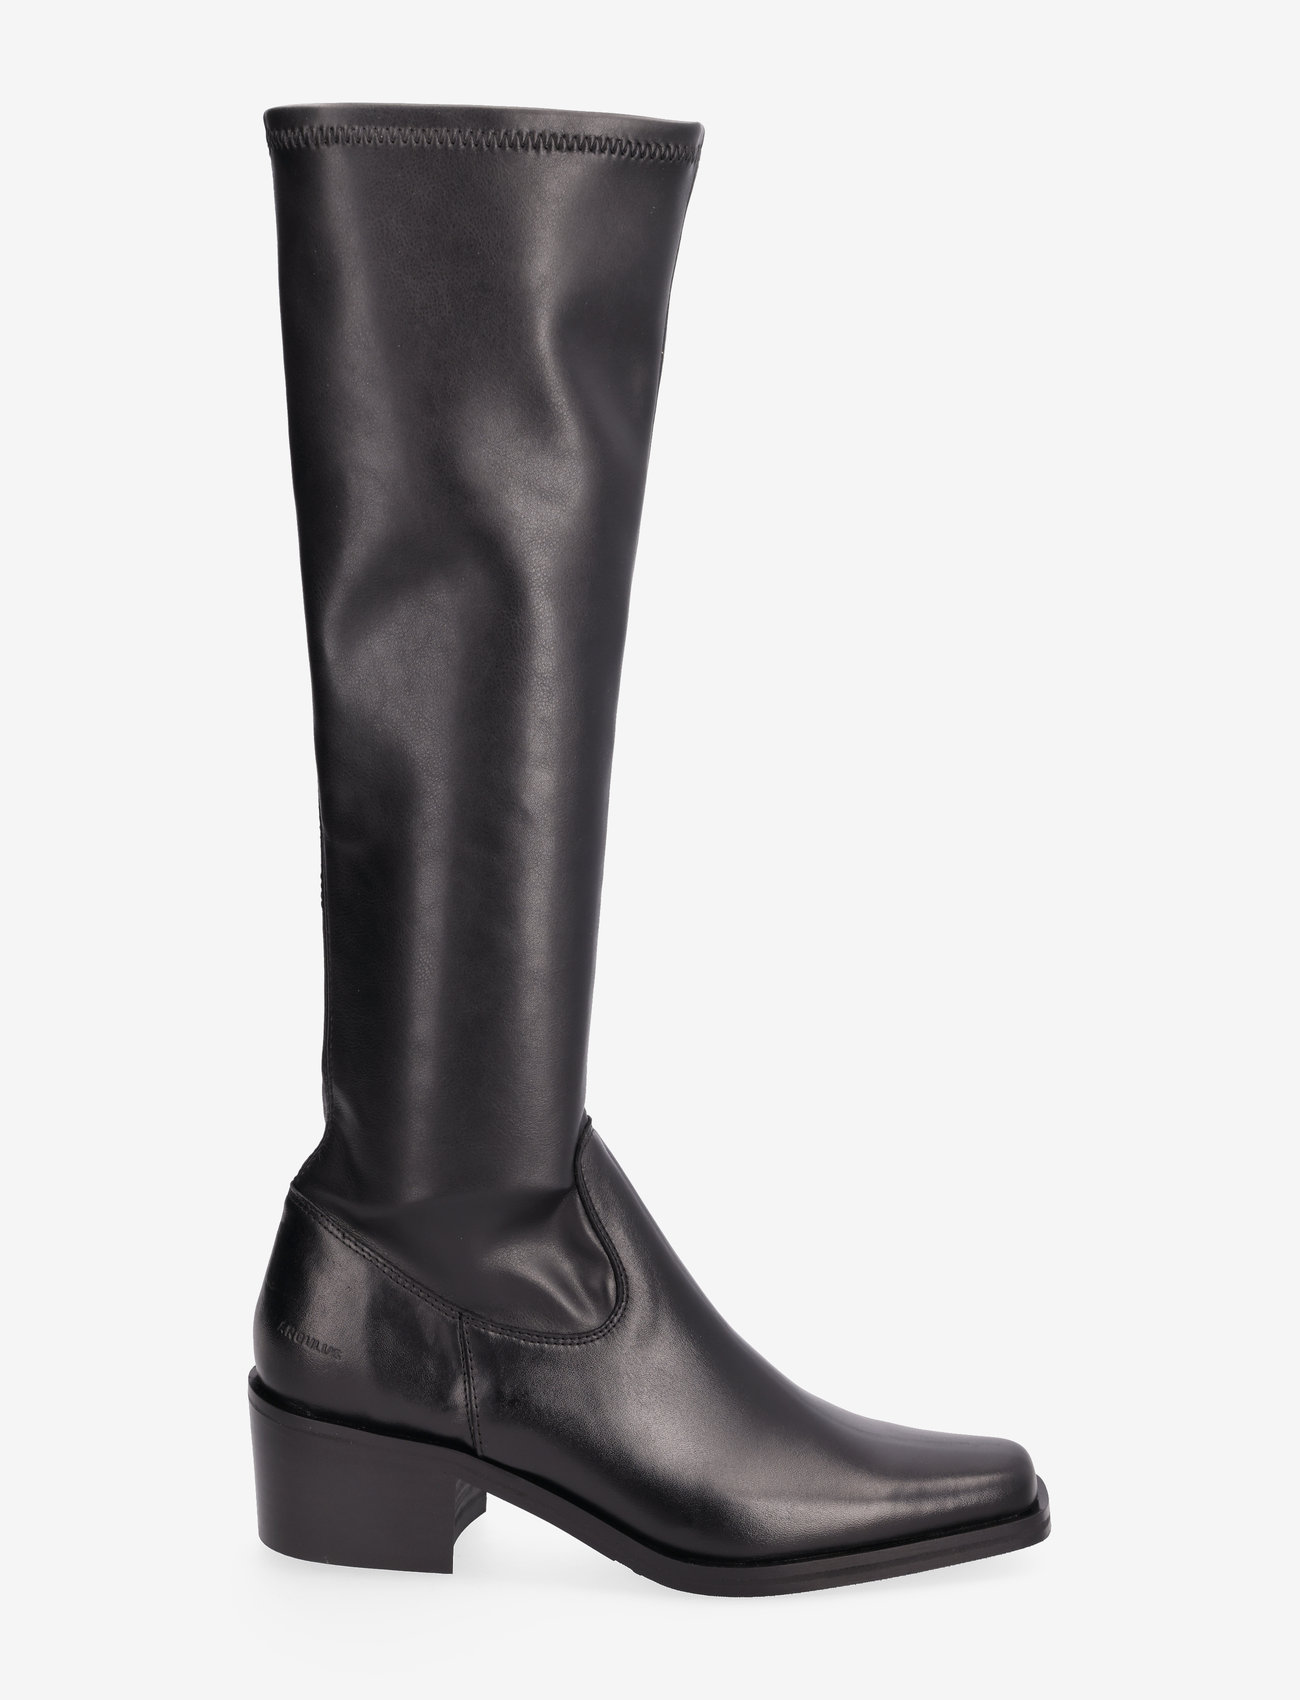 ANGULUS - Boots - Block heel - lange stiefel - 1604/1746 black/black - 1